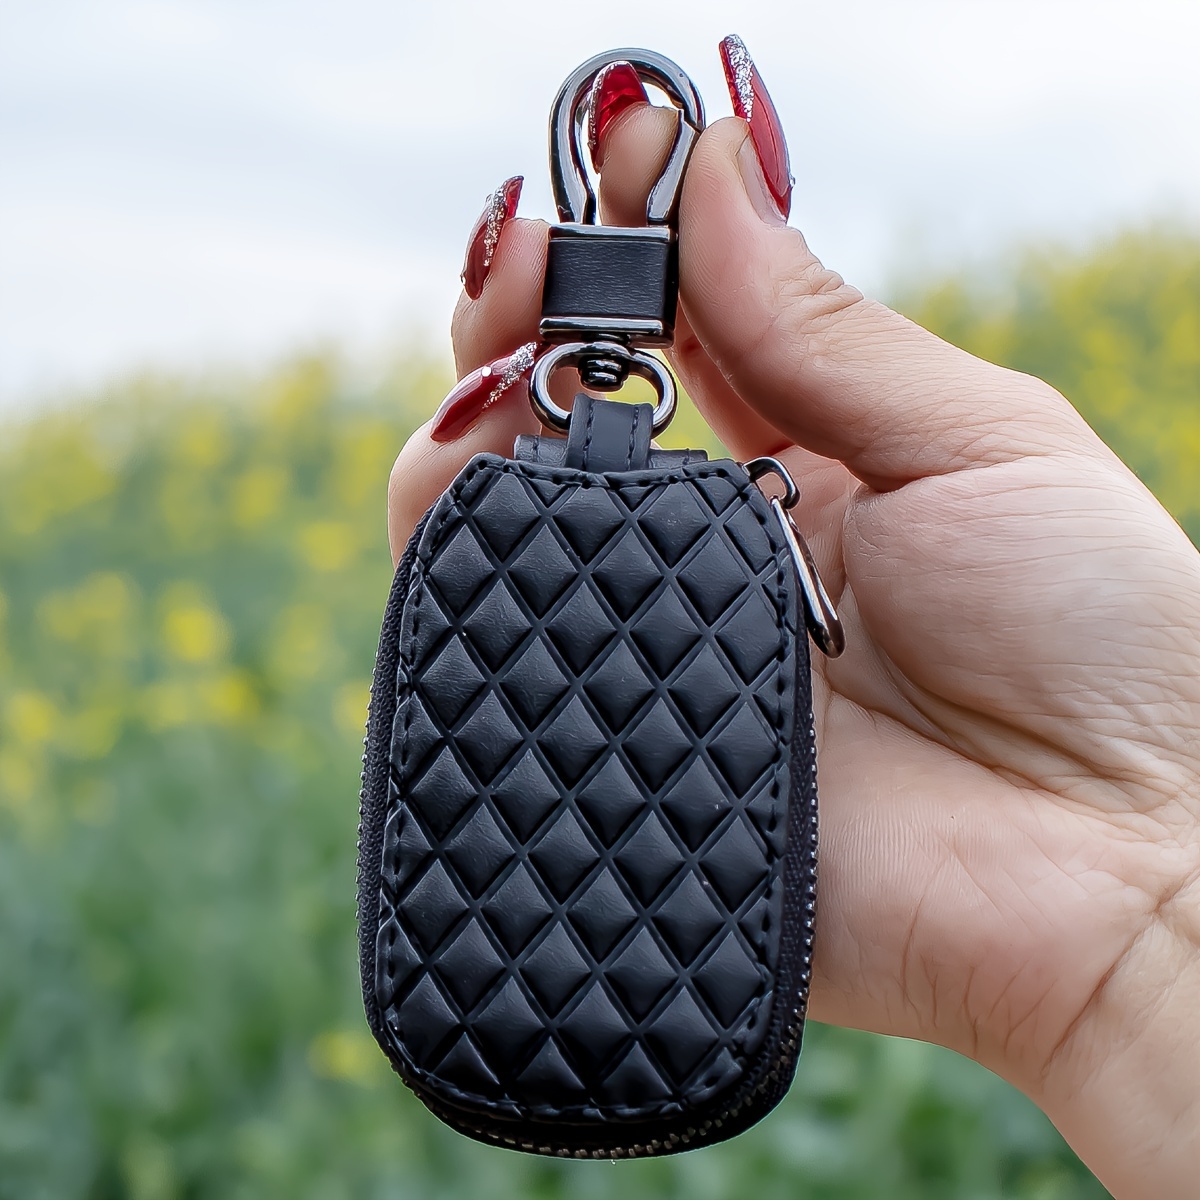 

1pc Key Storage Bag Fashion Rhombus Universal Black Brown Key Bag For Hanging Car Keys To Send Small Gifts To And Family